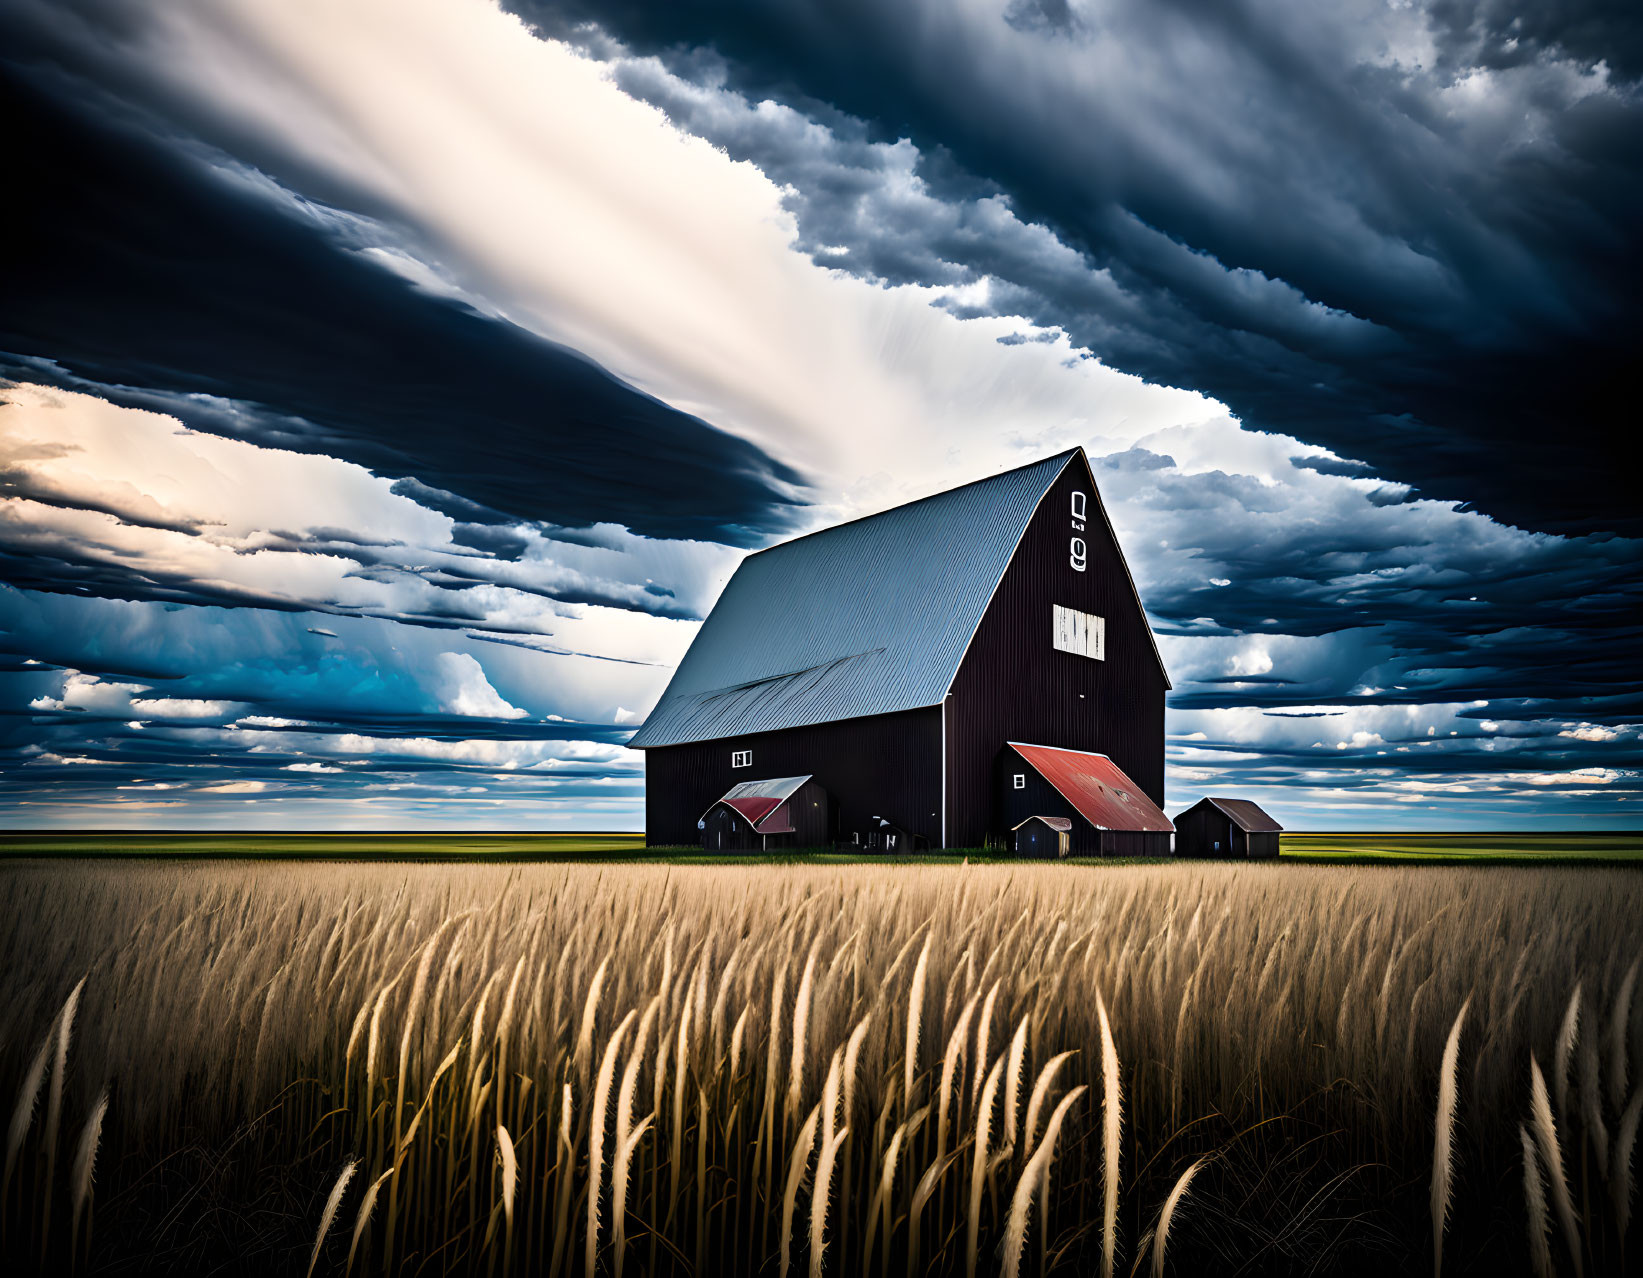 Dark barn under moody sky with golden wheat field